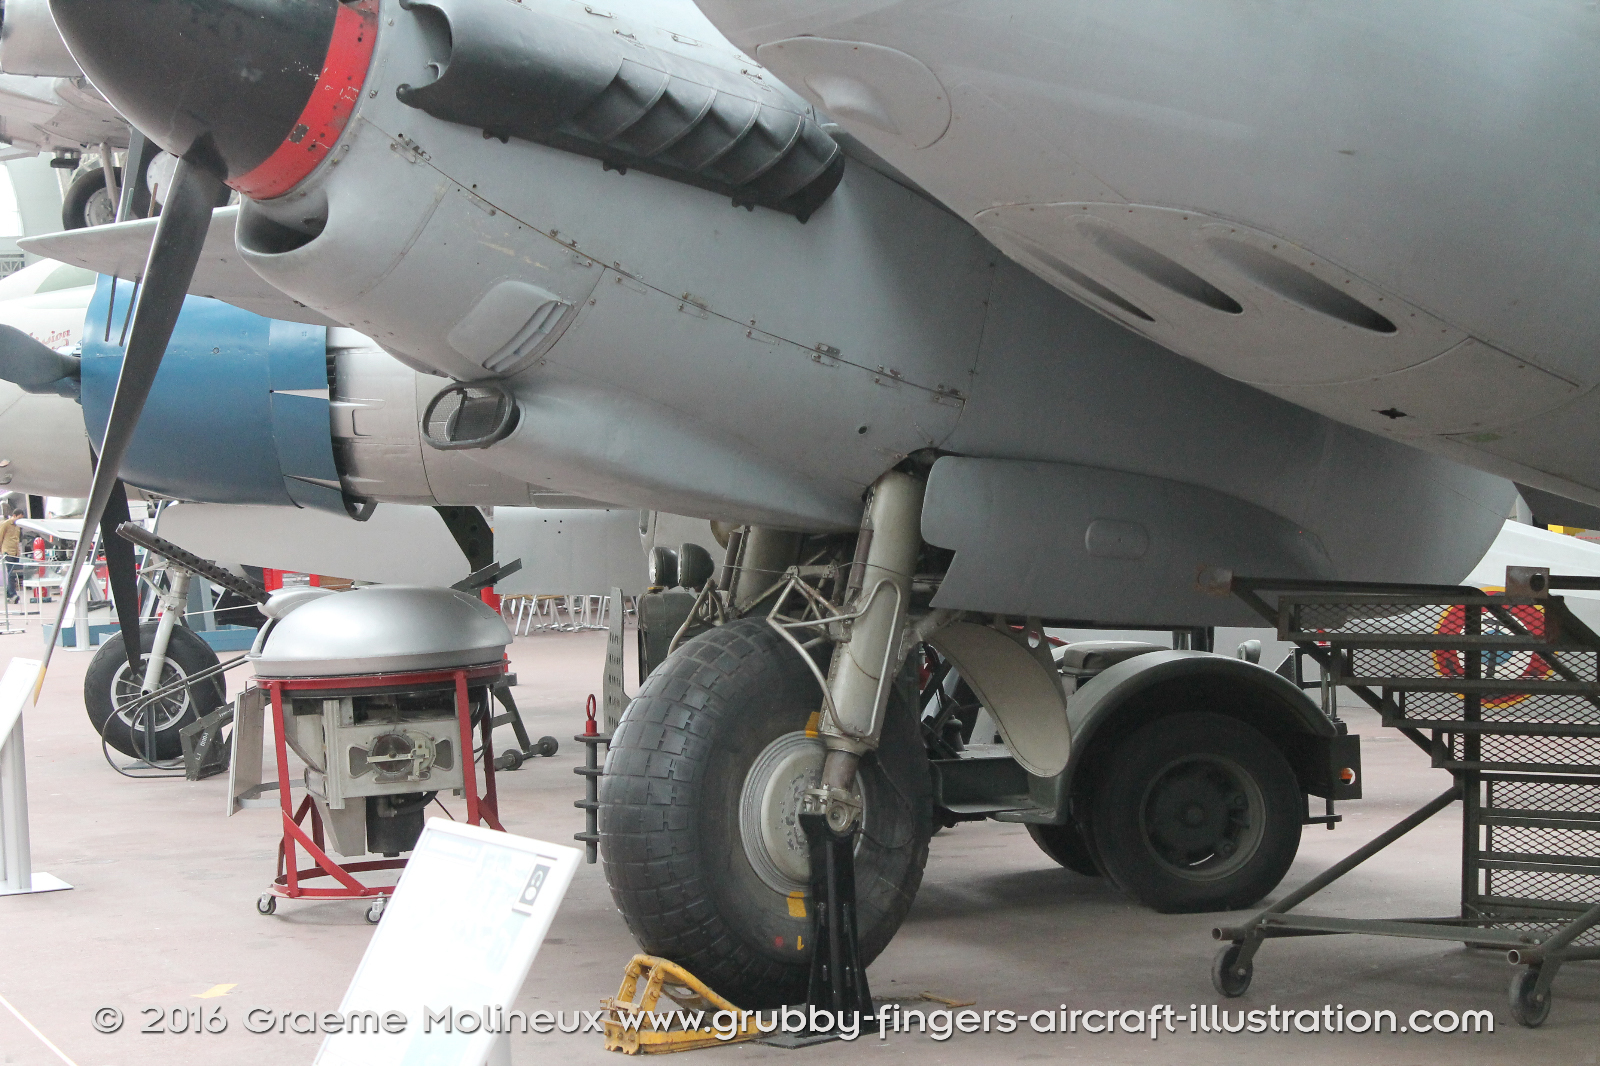 de_Havilland_Mosquito_Walkaround_Mk30_MB-42_Belgian_Air_Force_Museum_2015_12_GraemeMolineux